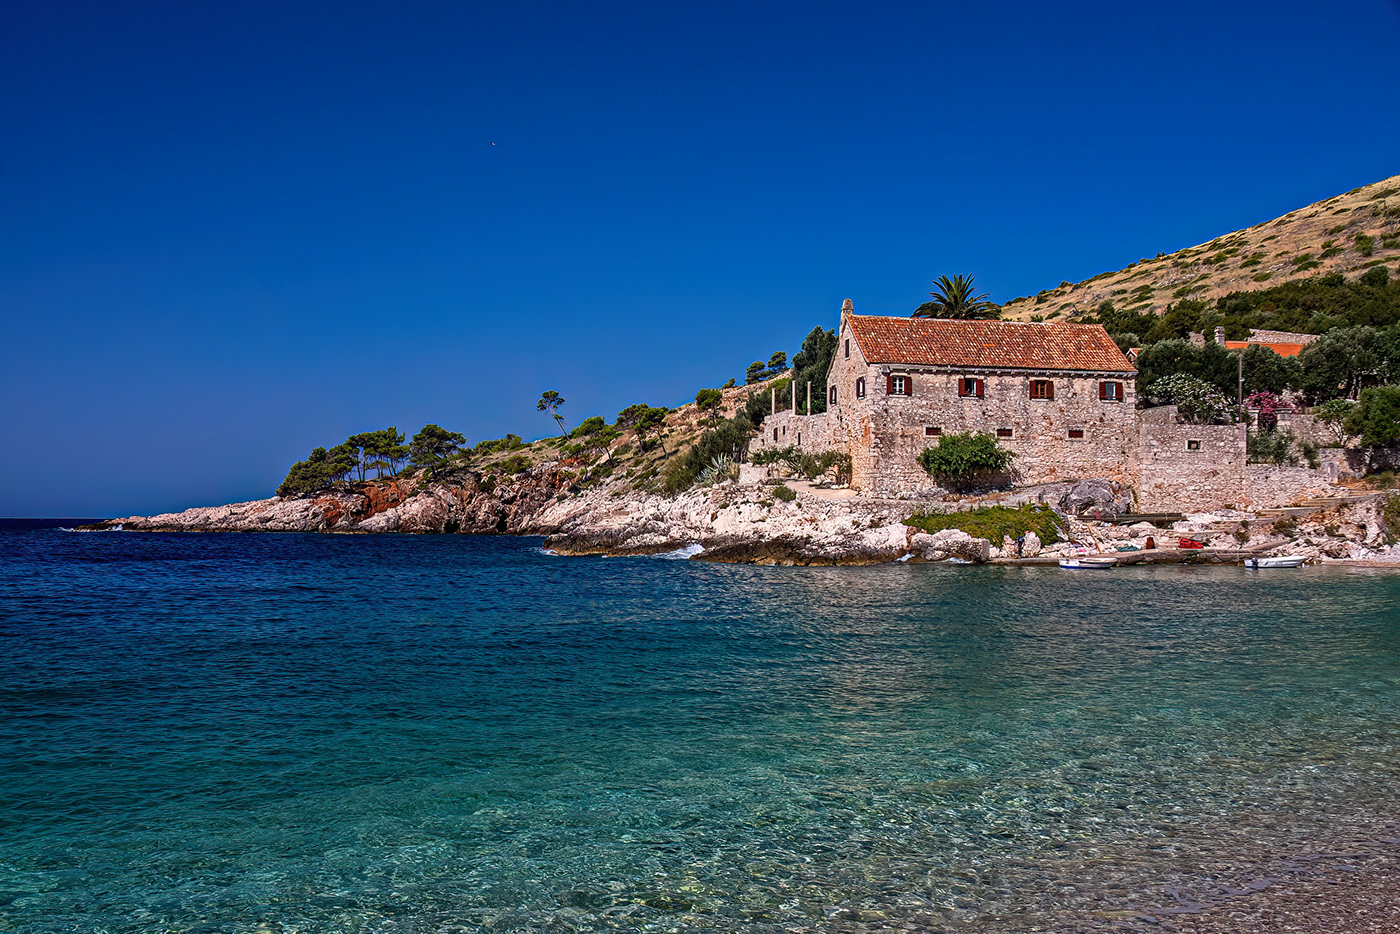 beach boat Croatia Hvar red rocks rocks sea Seaside seaside house seshore